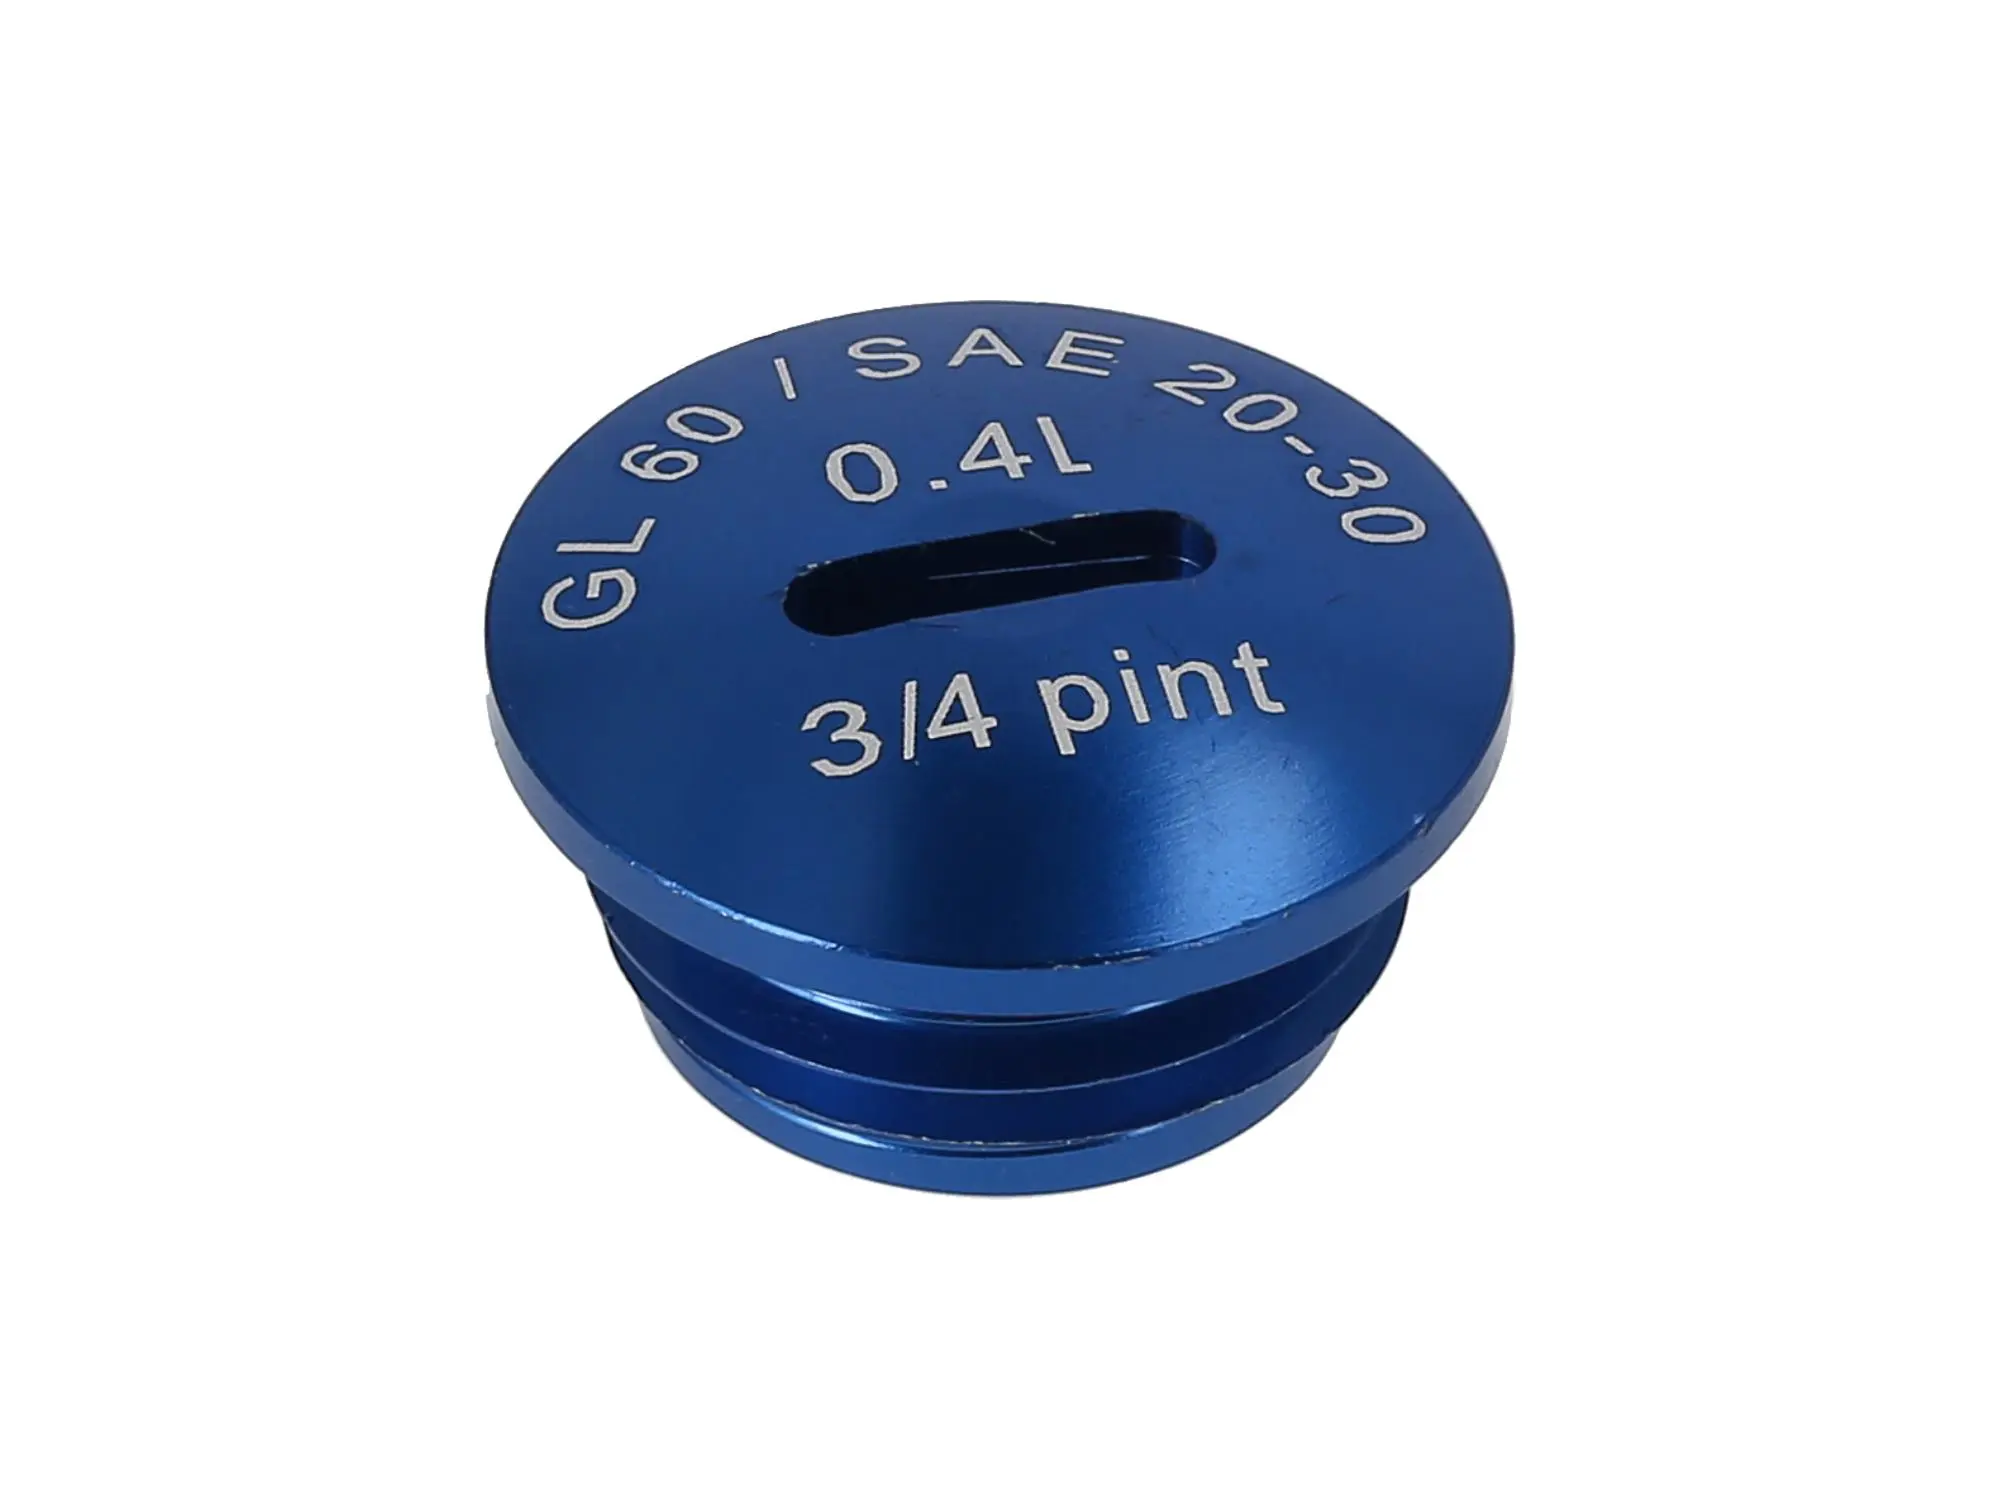 Verschlussschraube, Aluminium Blau eloxiert (Öleinfüllöffnung), ohne O-Ring, Art.-Nr.: 10022755 - Bild 1